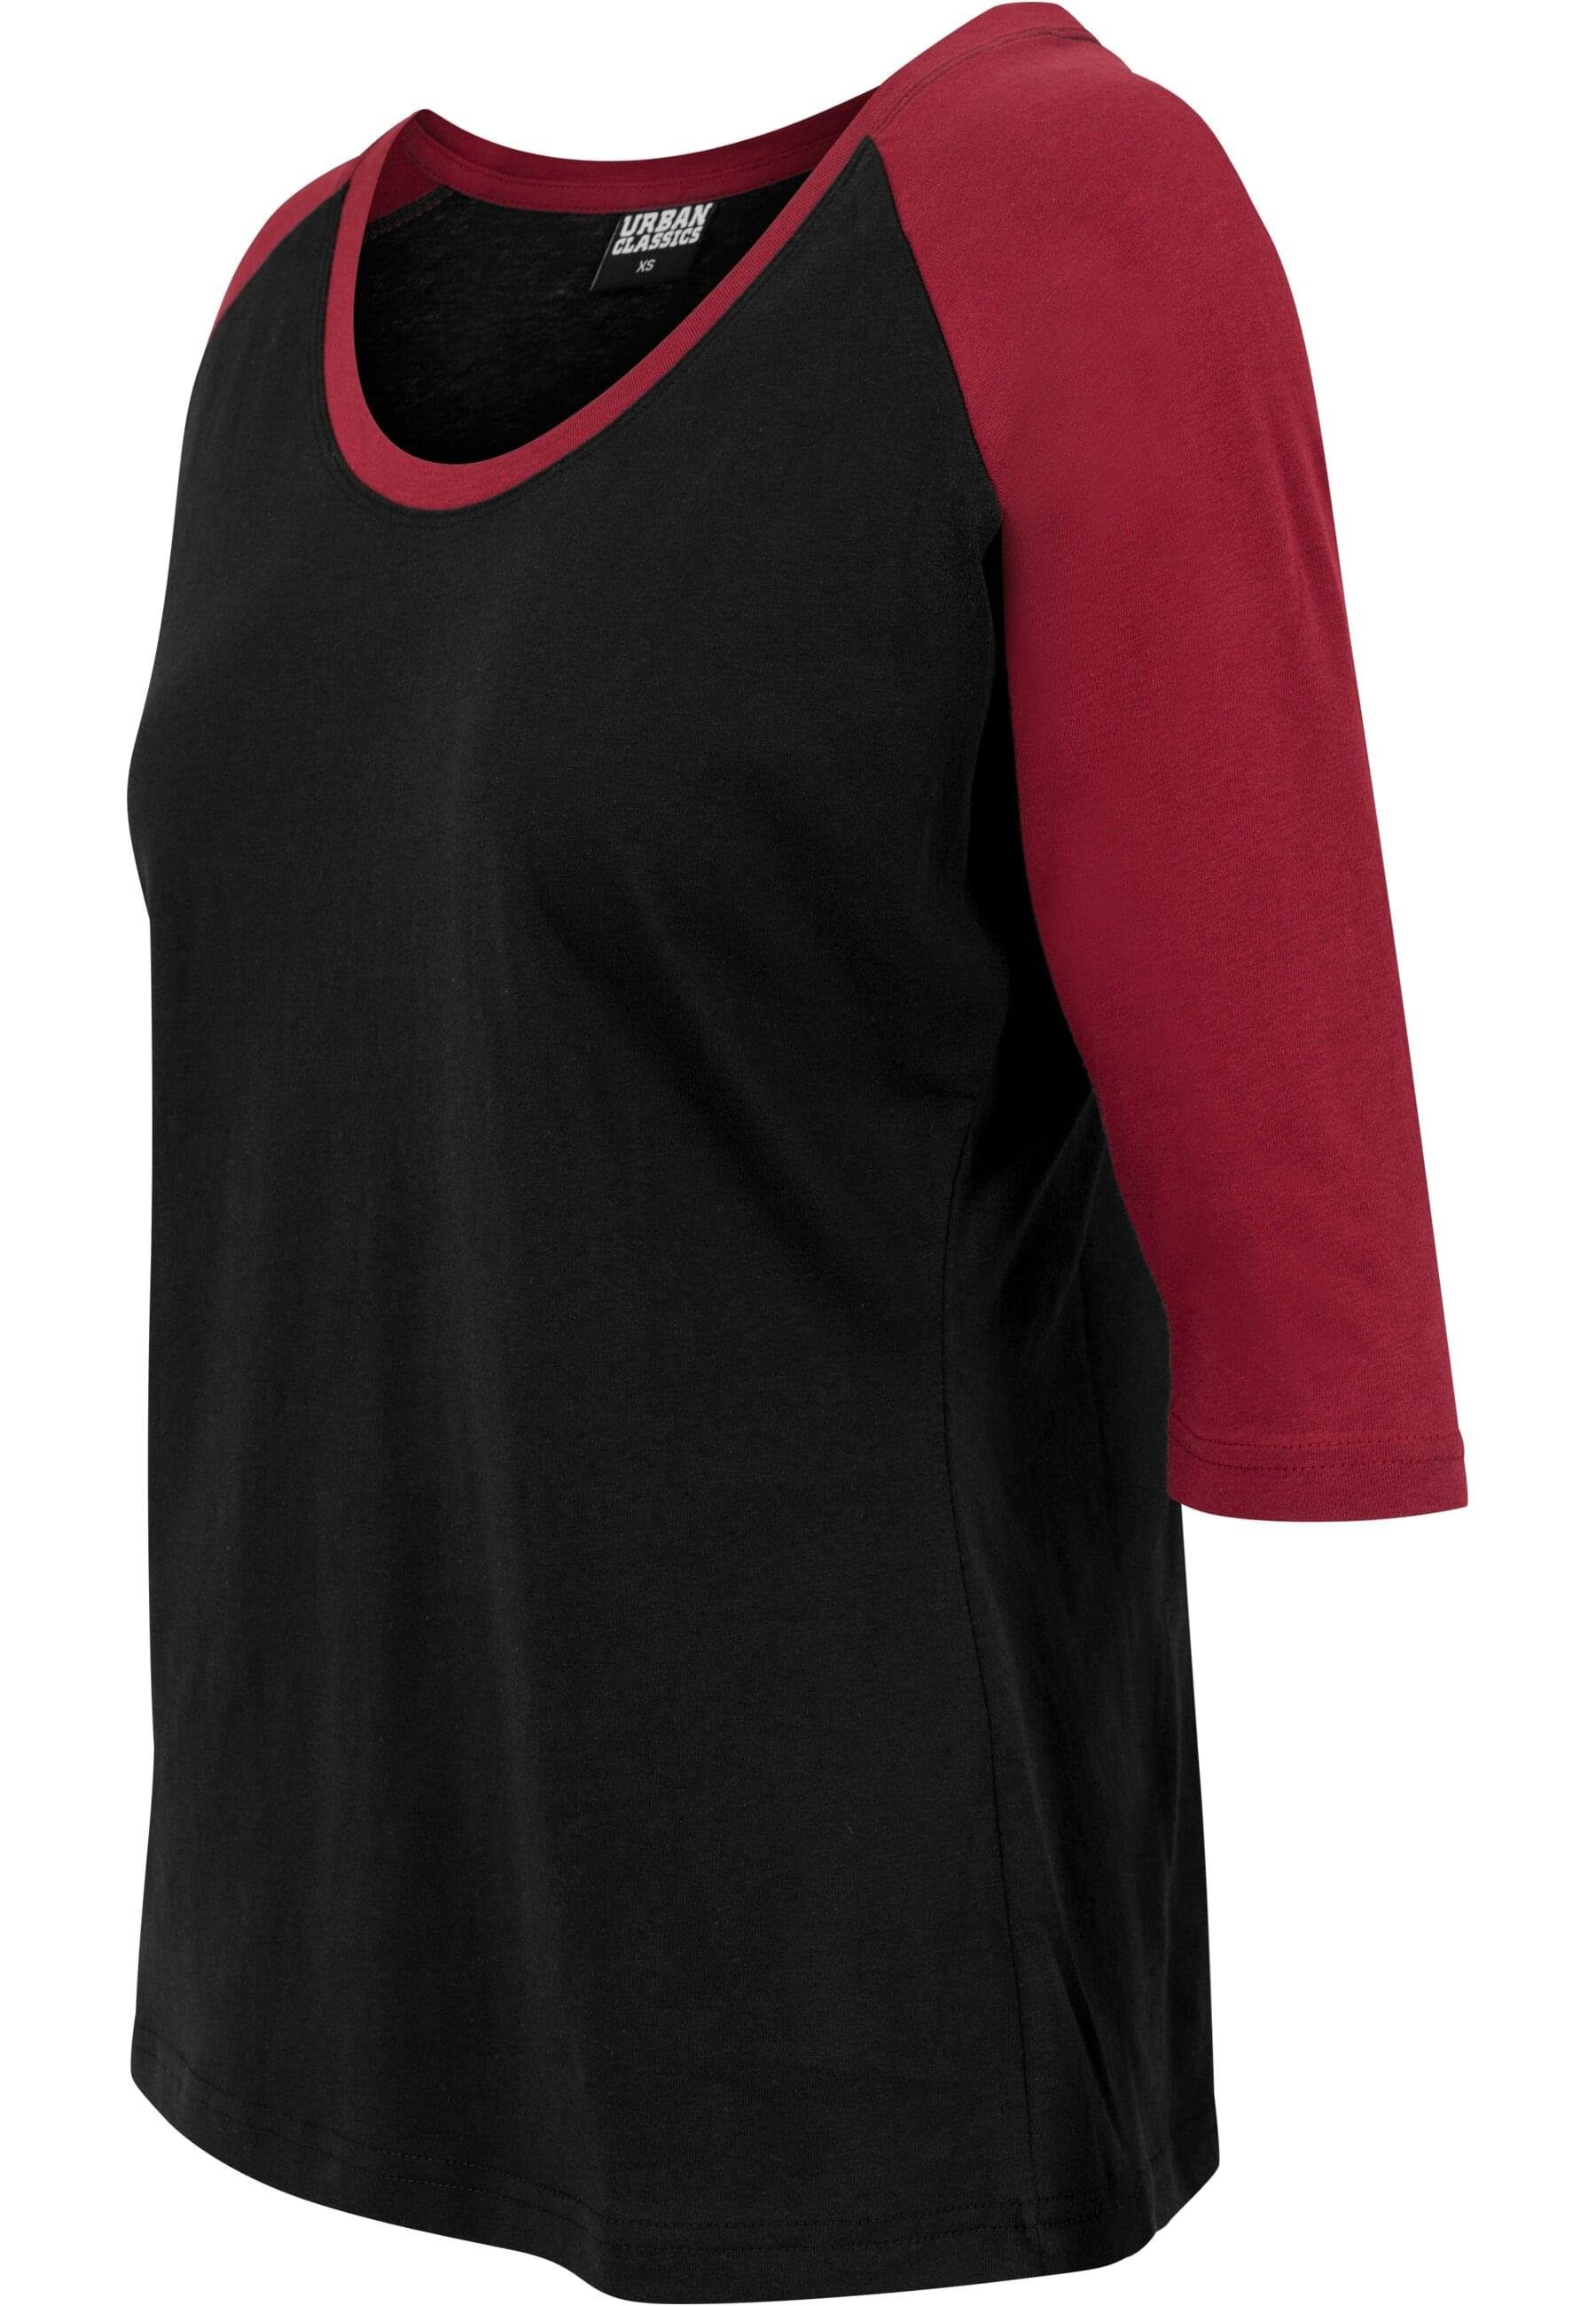 URBAN CLASSICS Kurzarmshirt Damen black/burgundy Raglan Contrast Ladies Tee 3/4 (1-tlg)